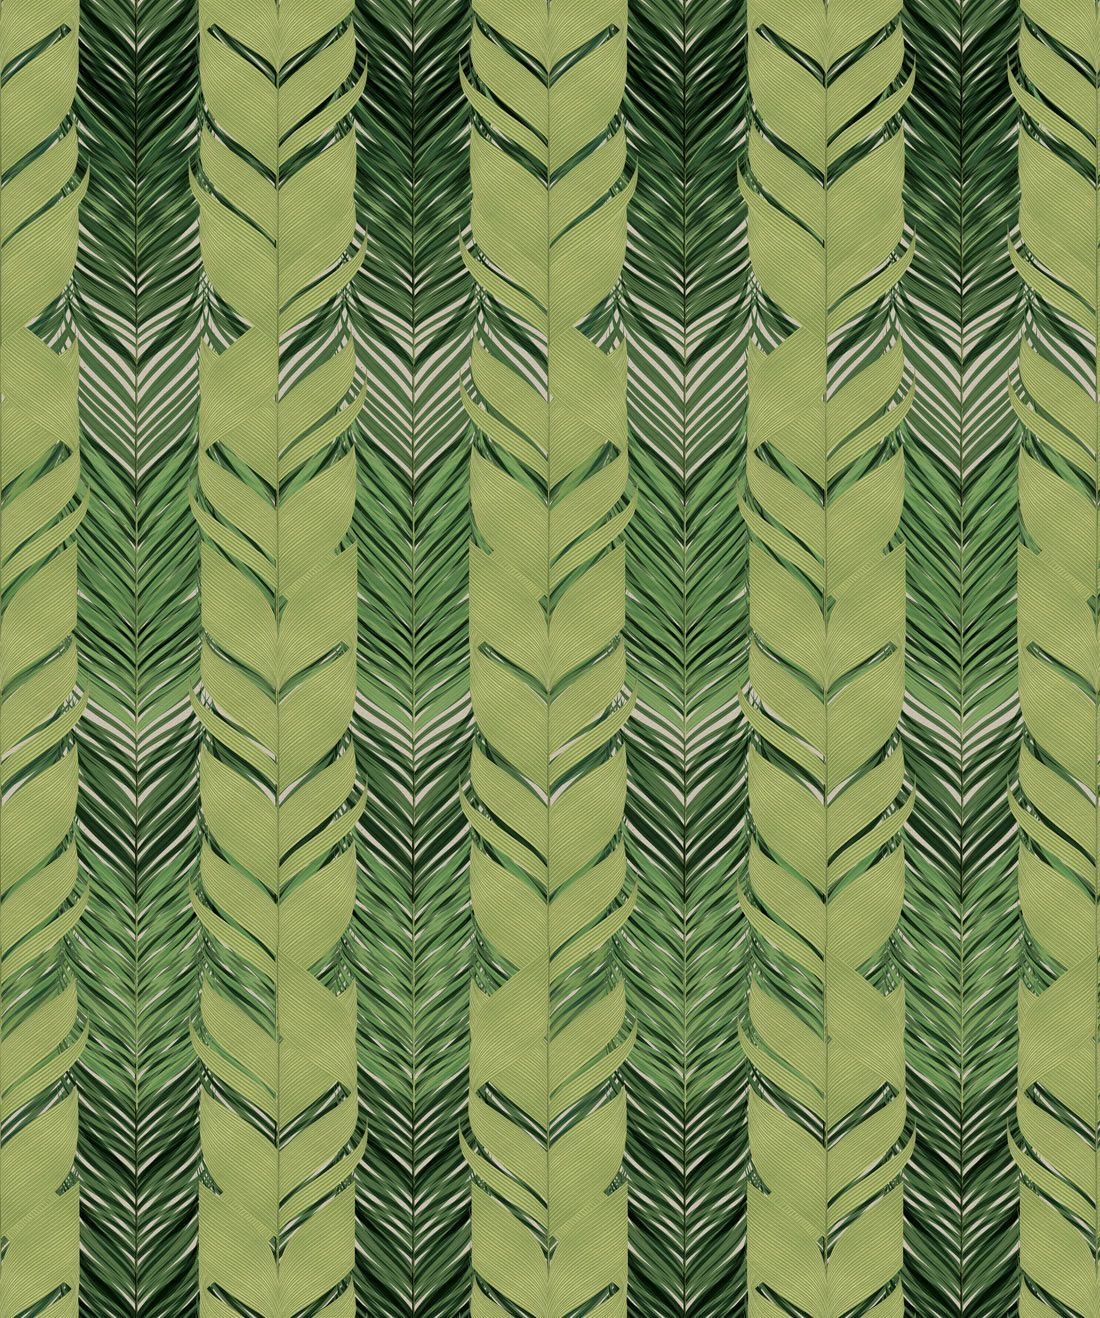 botanic wallpaper designs - Jungle Weave